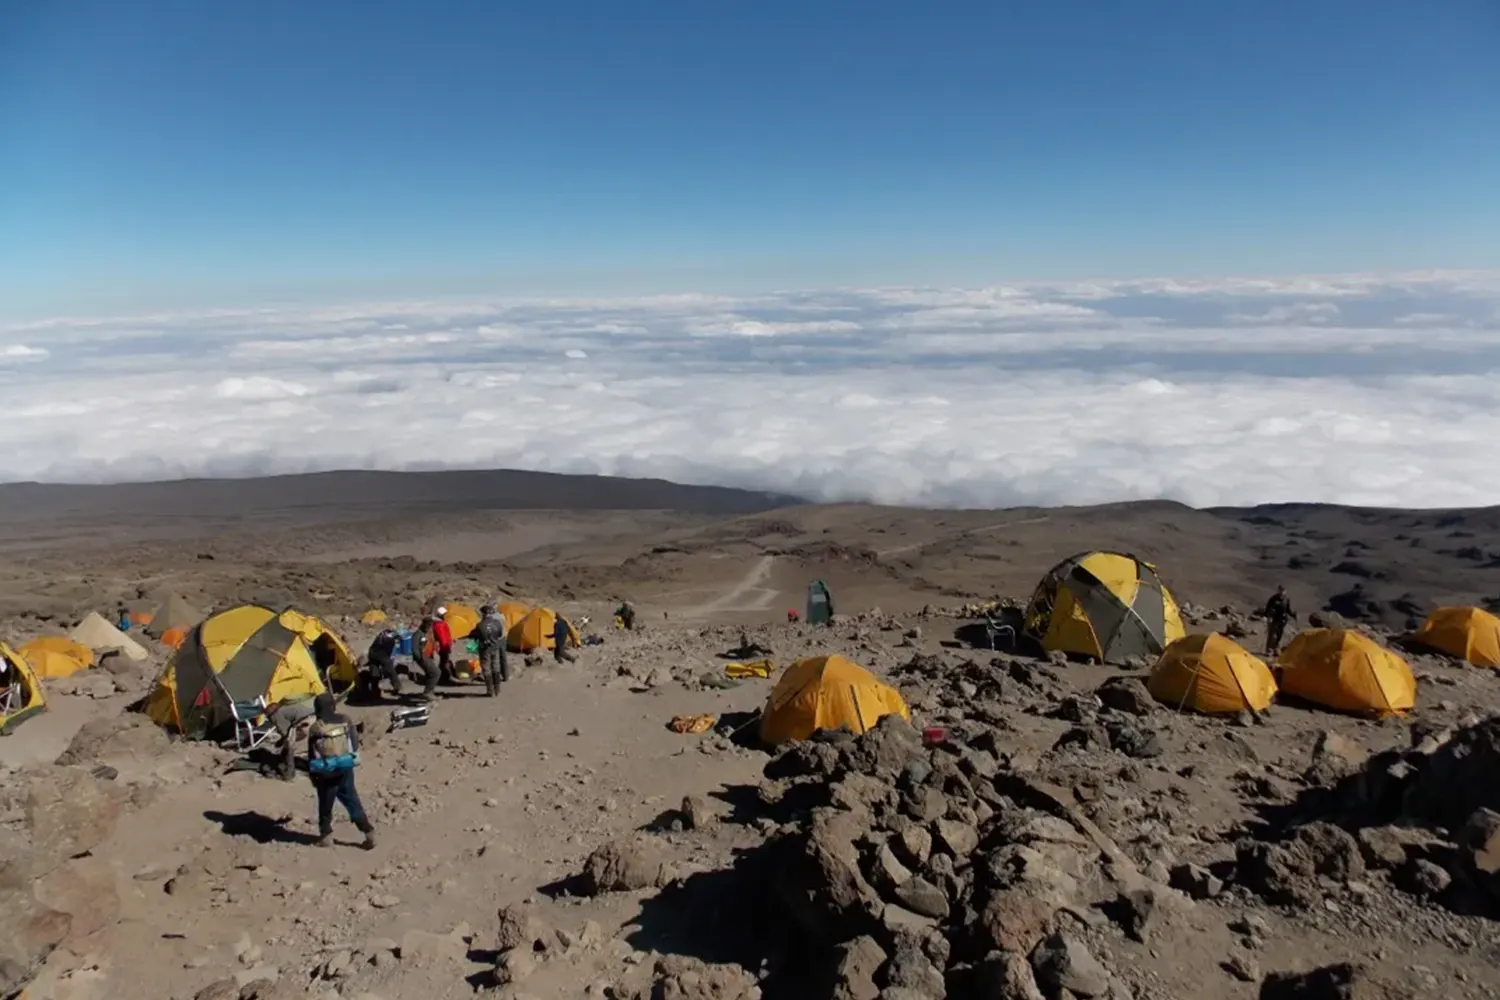 Mount Kilimanjaro by route